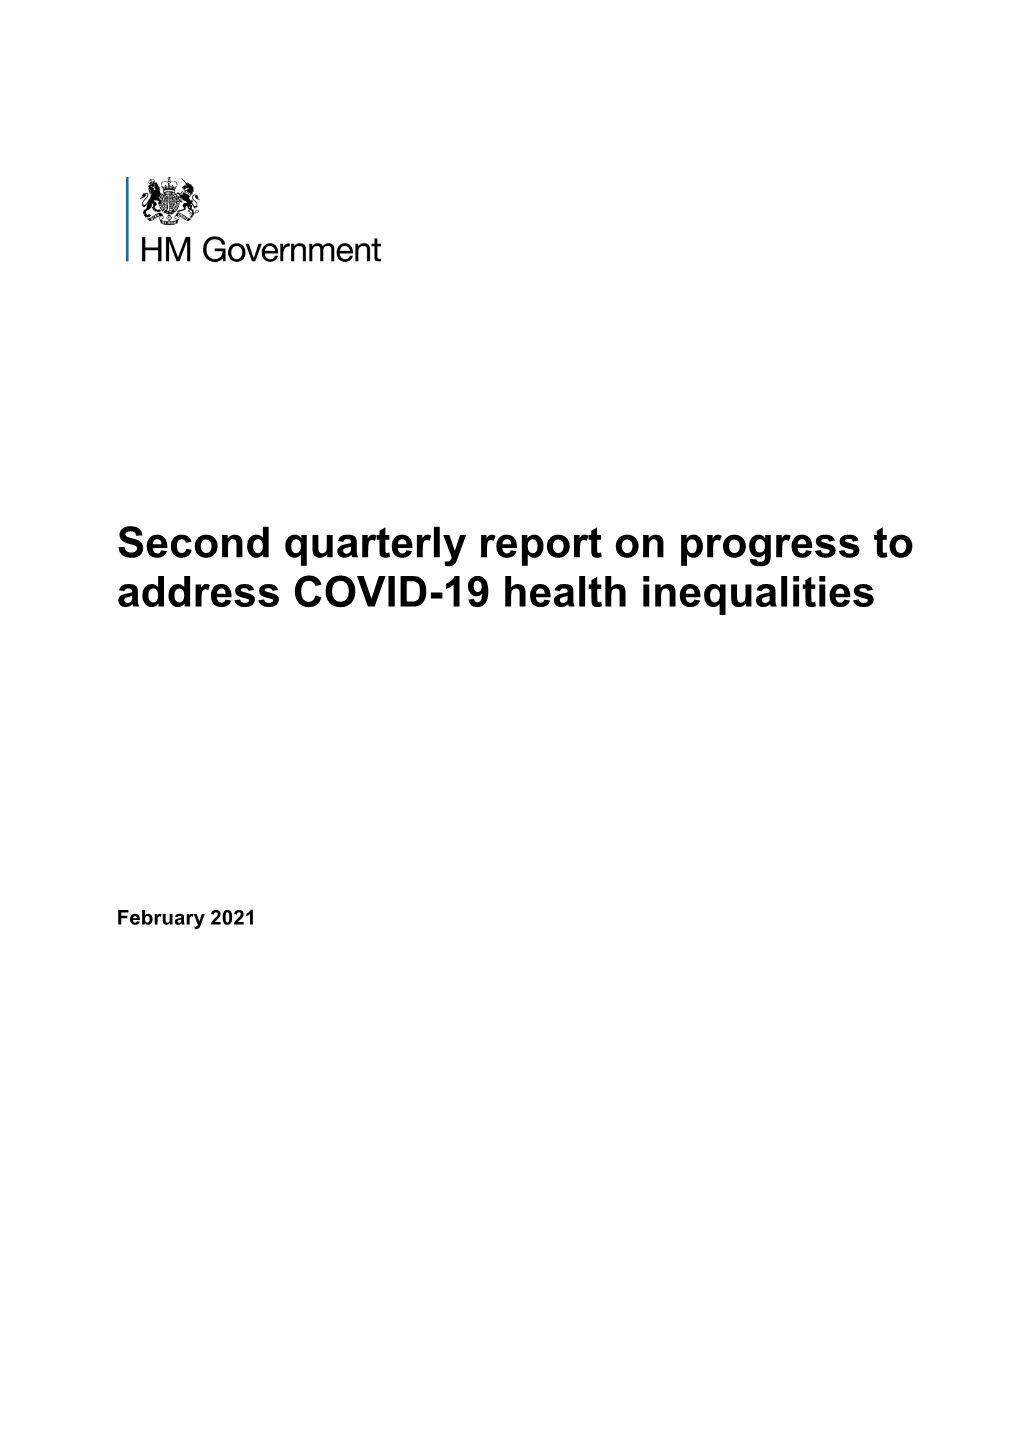 Second Quarterly Report on Progress to Address COVID-19 Health Inequalities